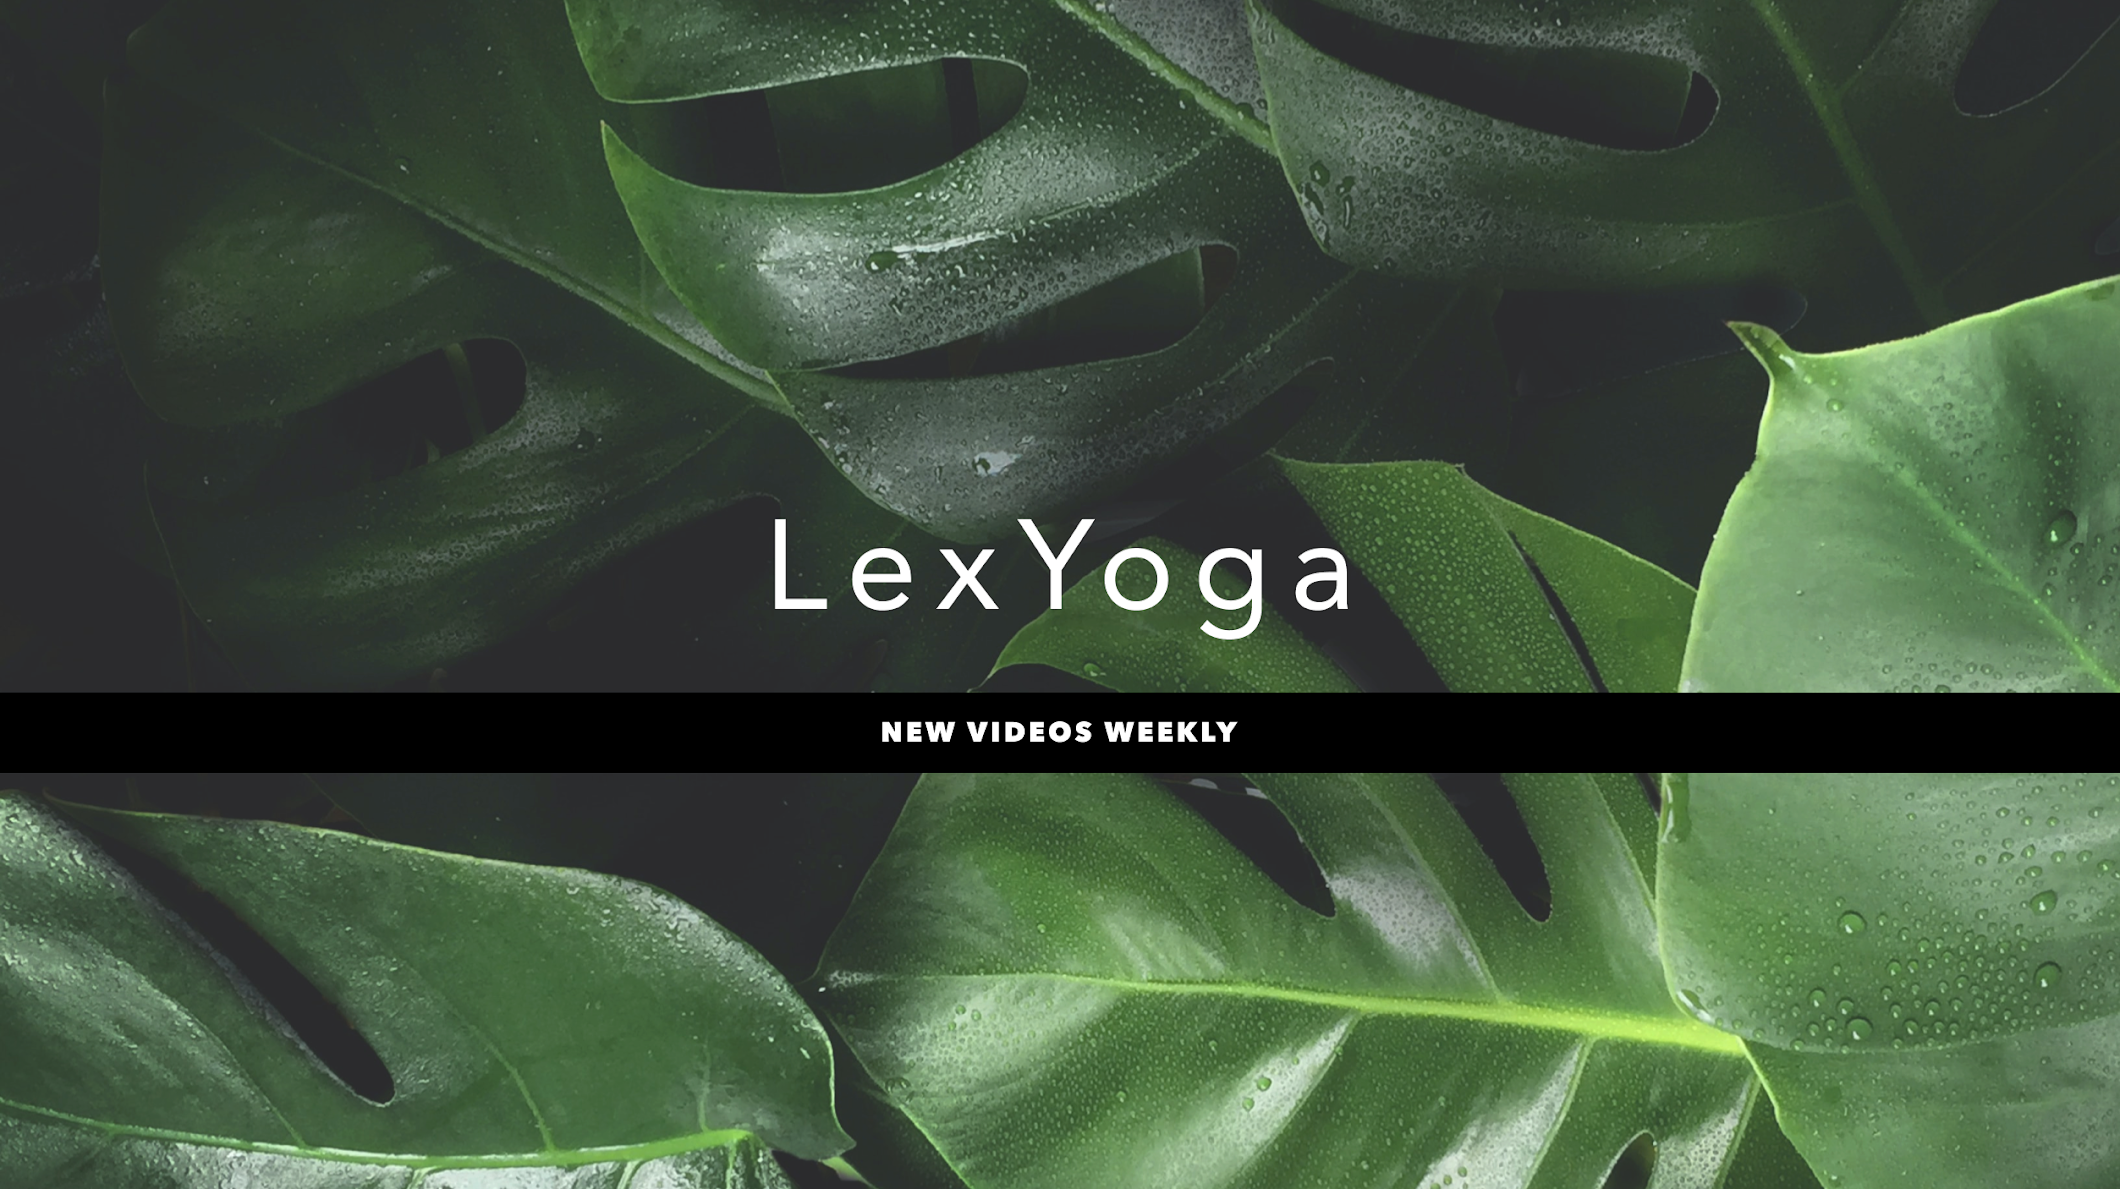 Lex Yoga